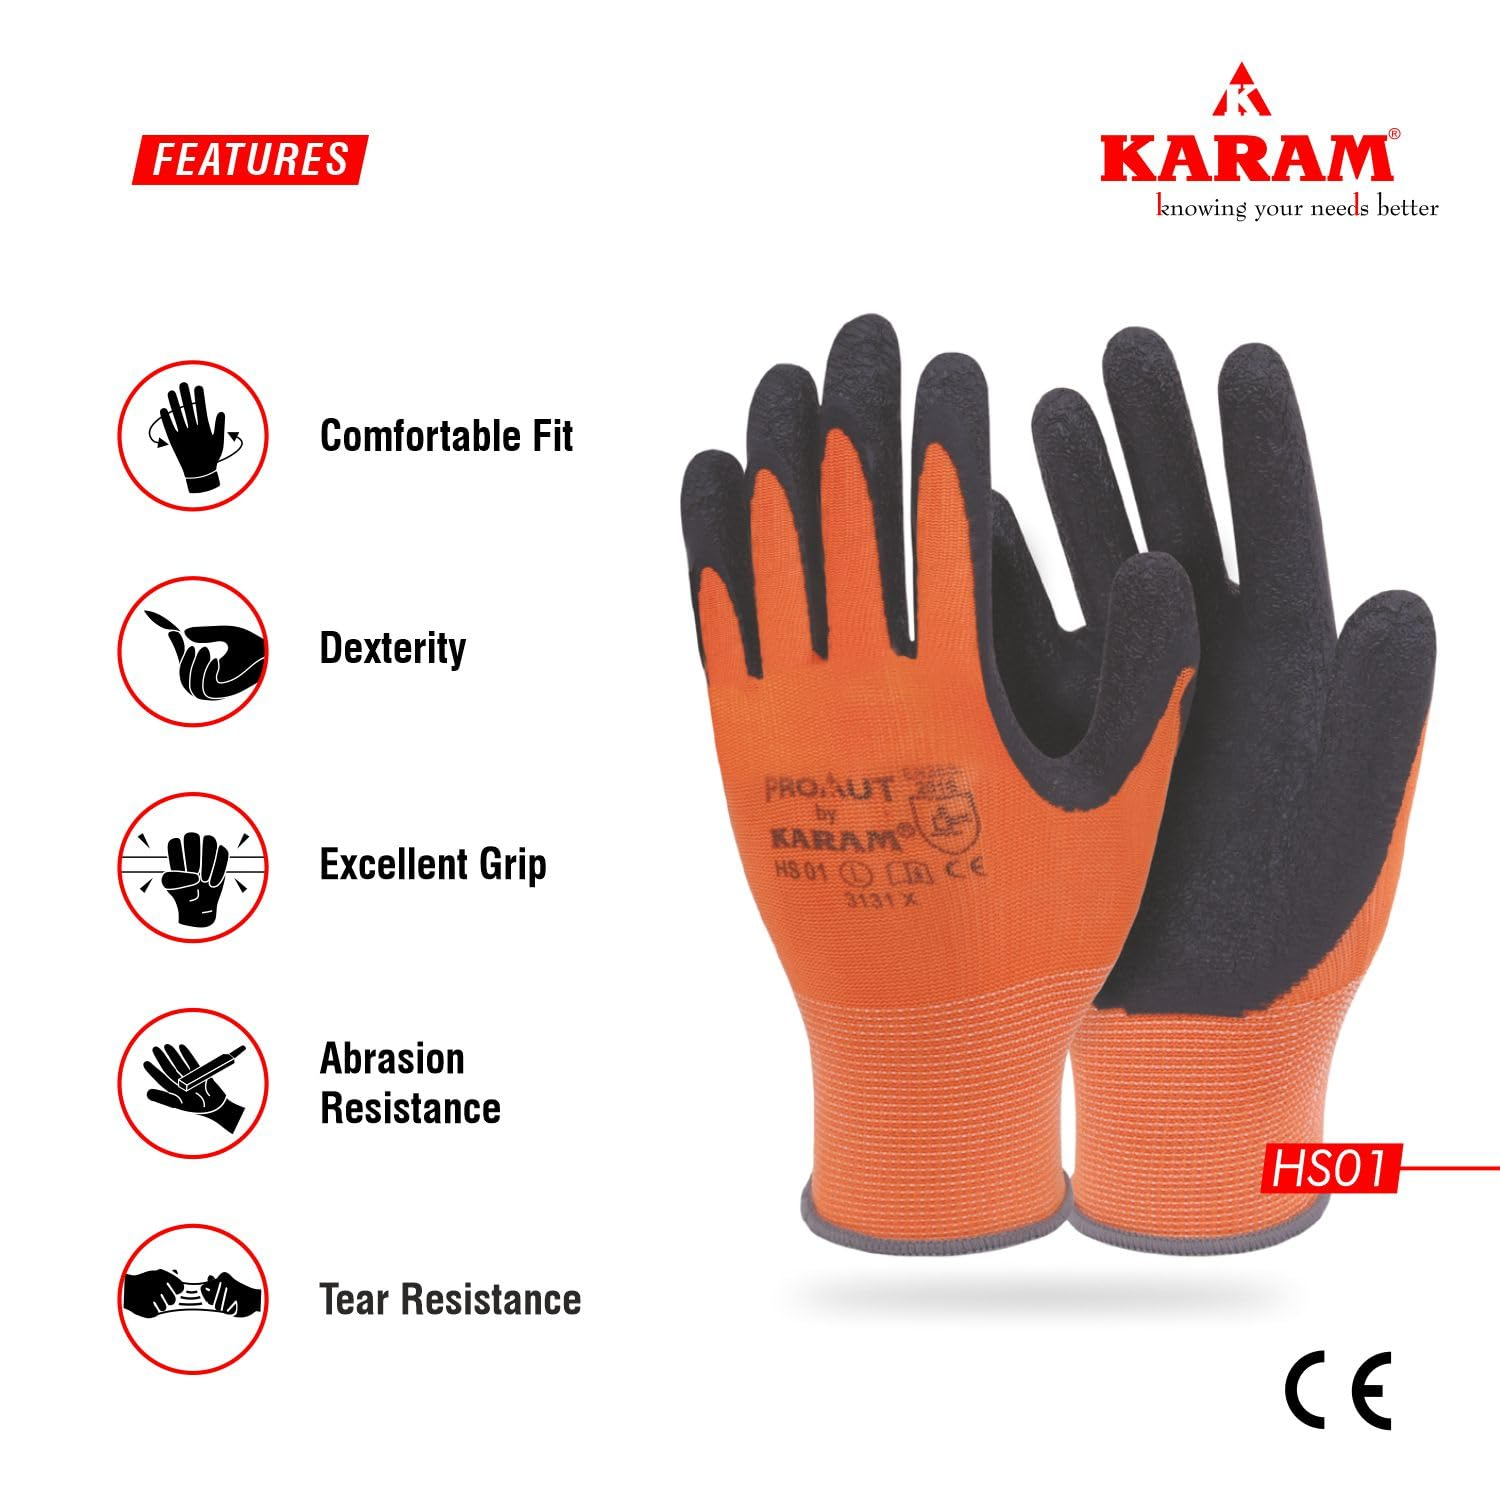 /storage/photos/1/karam new product/Karam Safety gloves hs 01 3.png